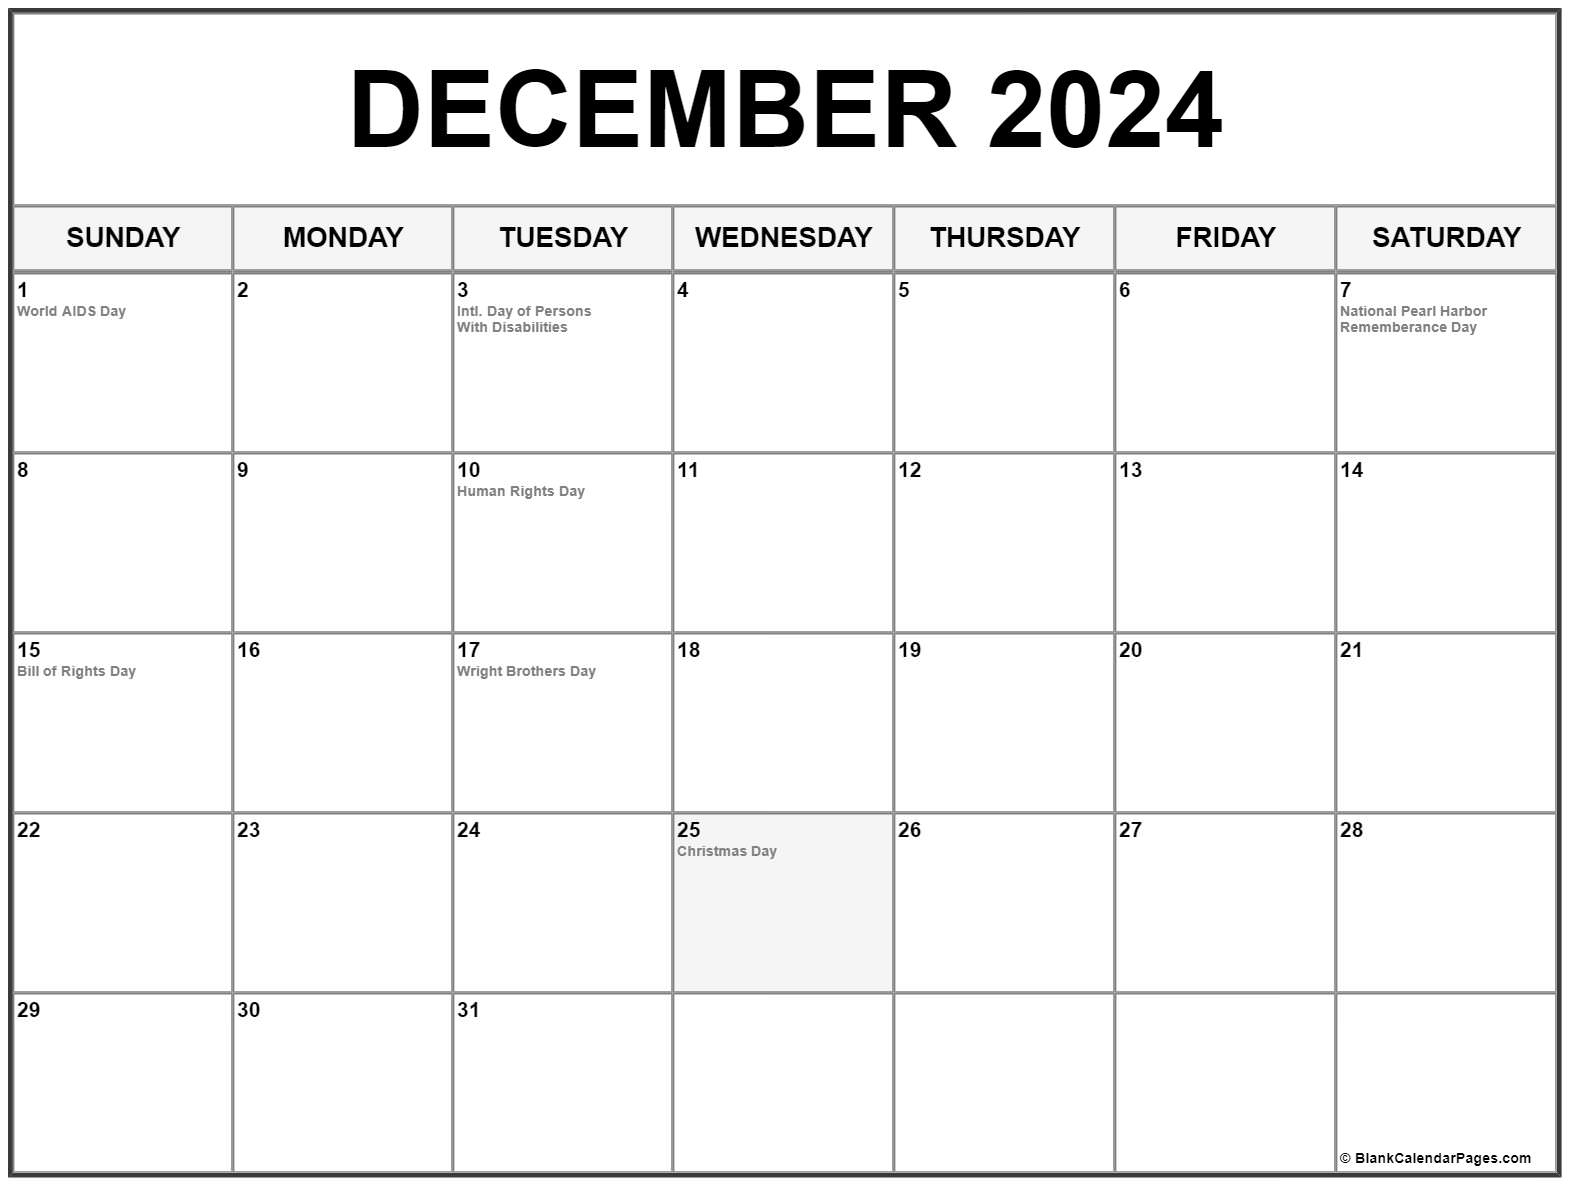 Calendrier D cembe 2024 Hatti Koralle - Free Printable 2024 Calendar December 24calendars